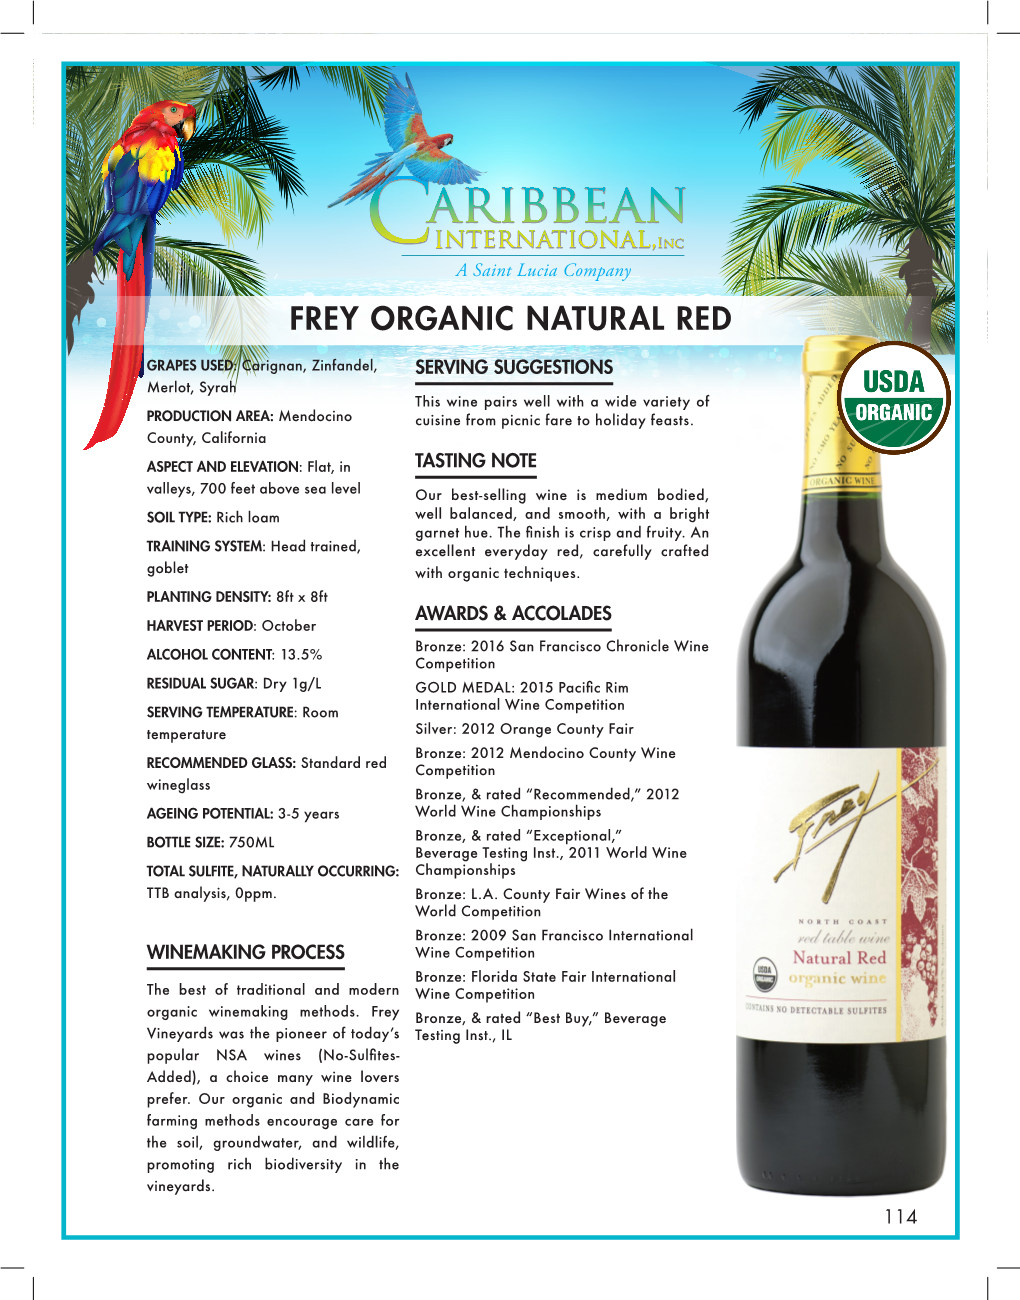 Frey Organic Natural Red